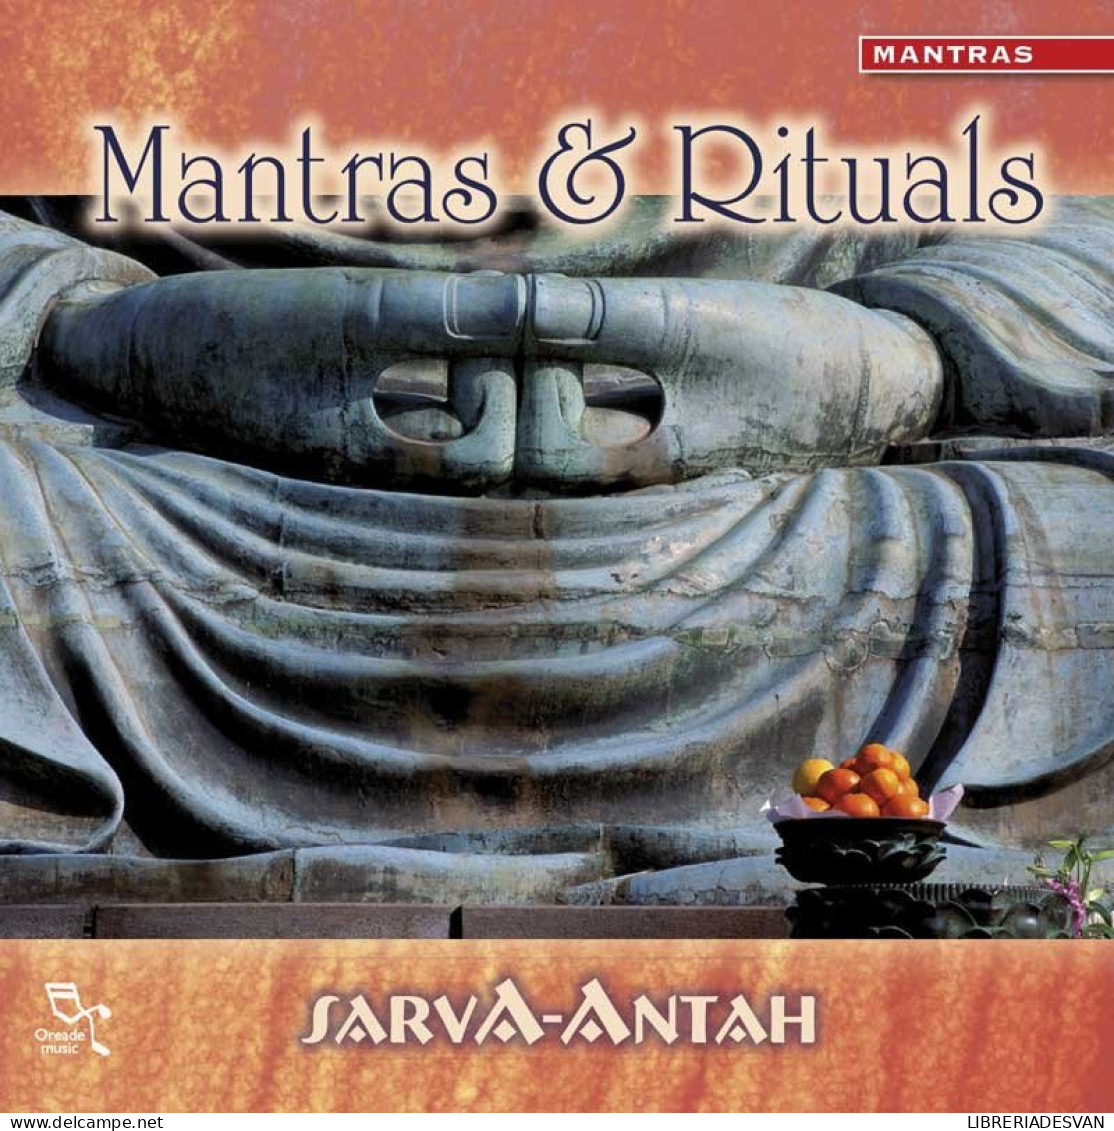 Sarva-Antah - Mantras & Rituals. CD - Nueva Era (New Age)